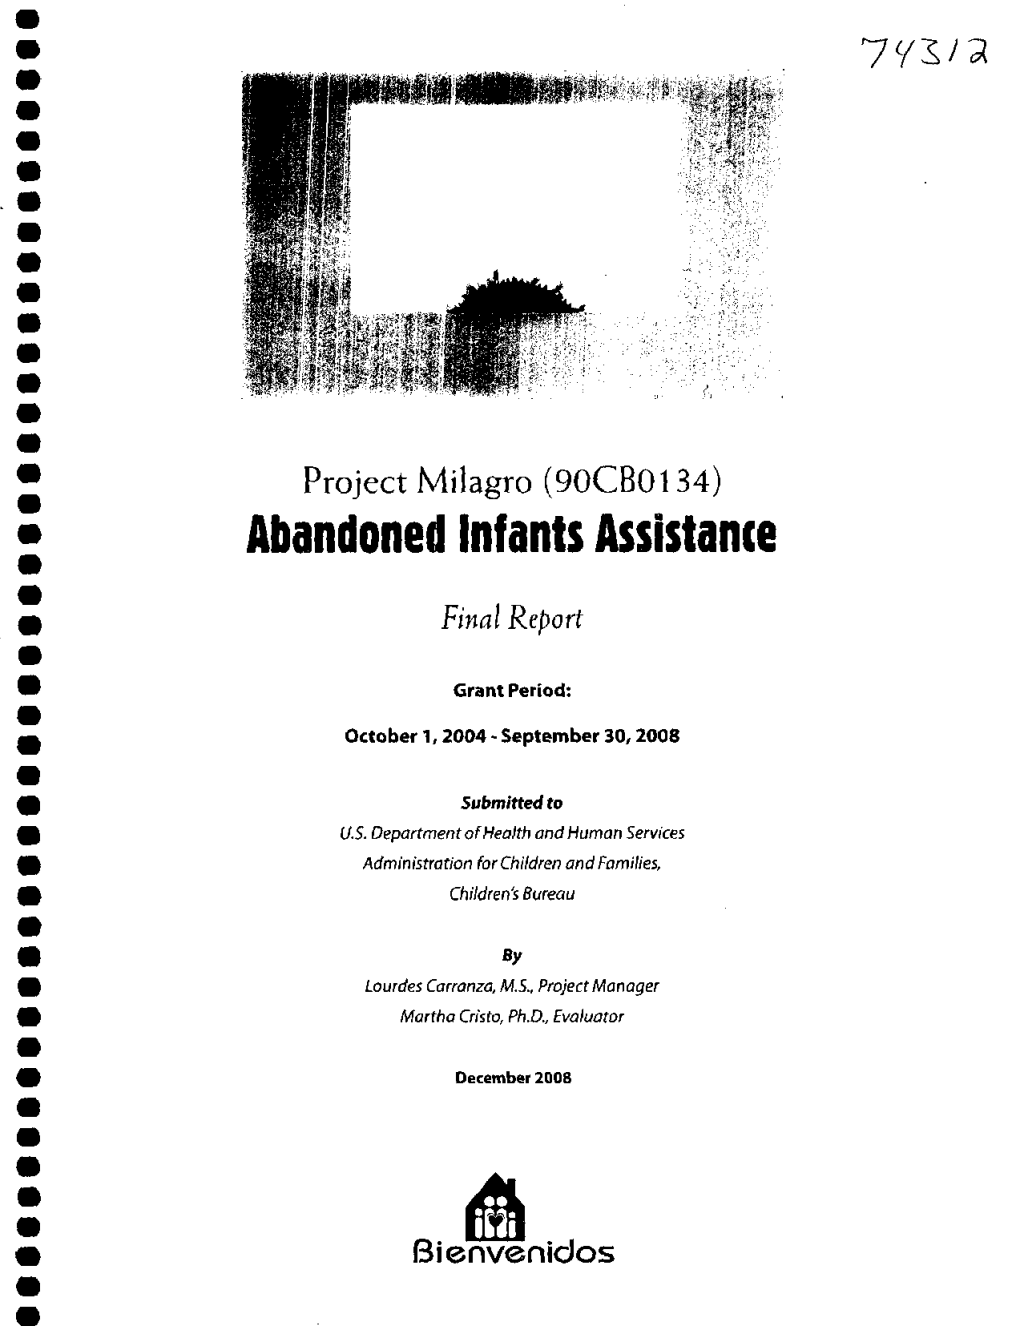 (90CB0134): Abandoned Infants Assistance